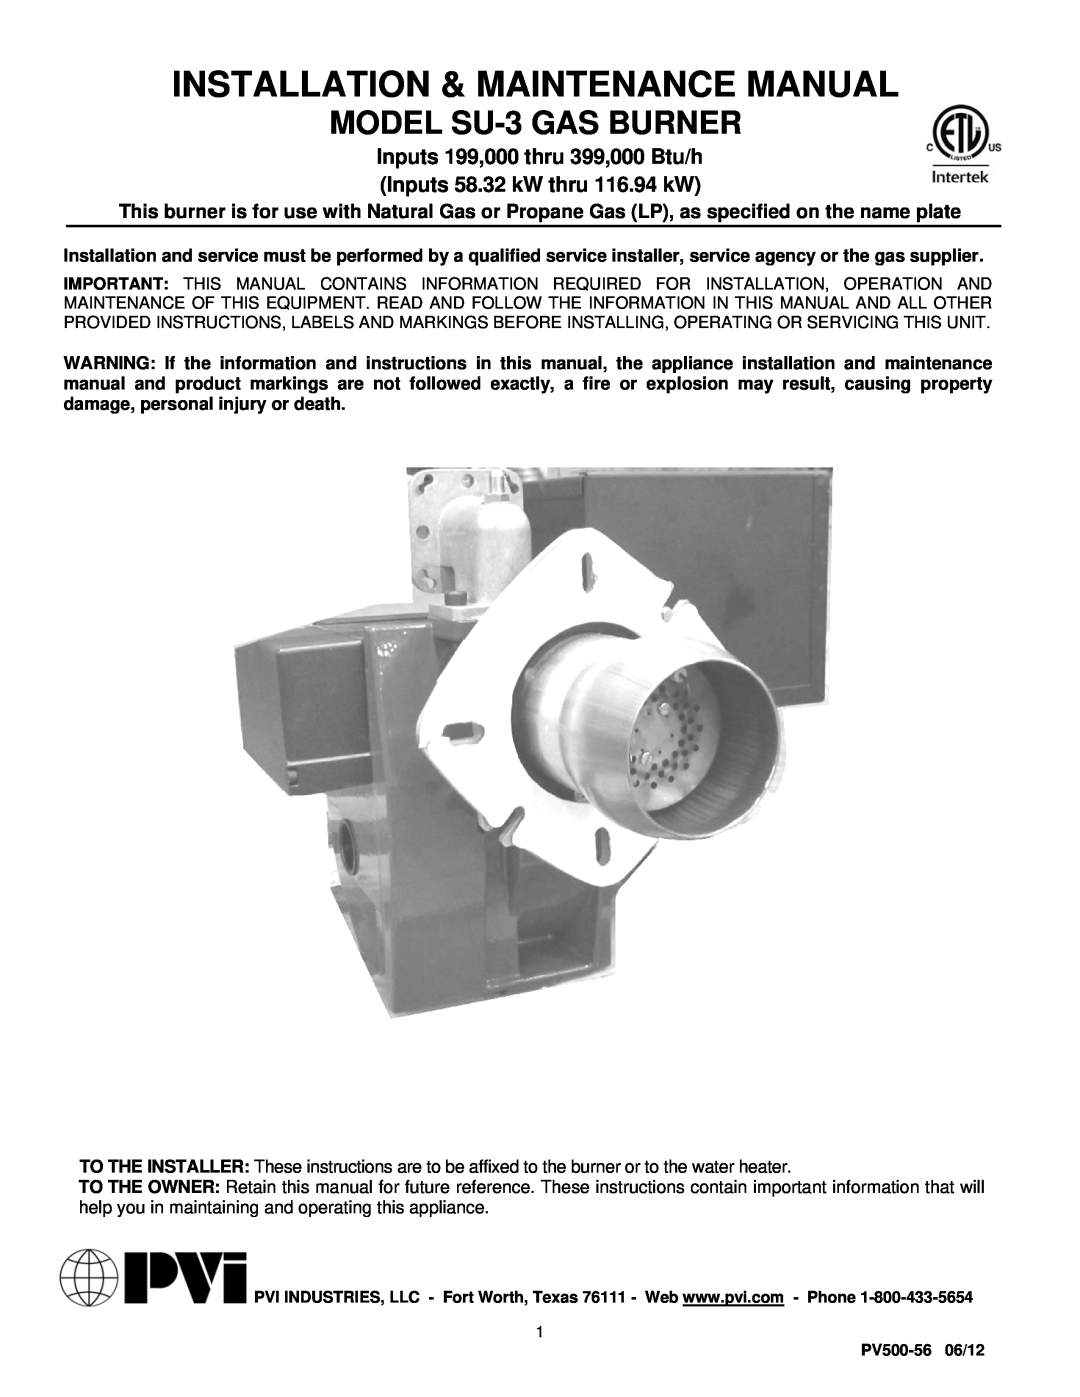 PVI Industries manual Installation & Maintenance Manual, MODEL SU-3GAS BURNER 